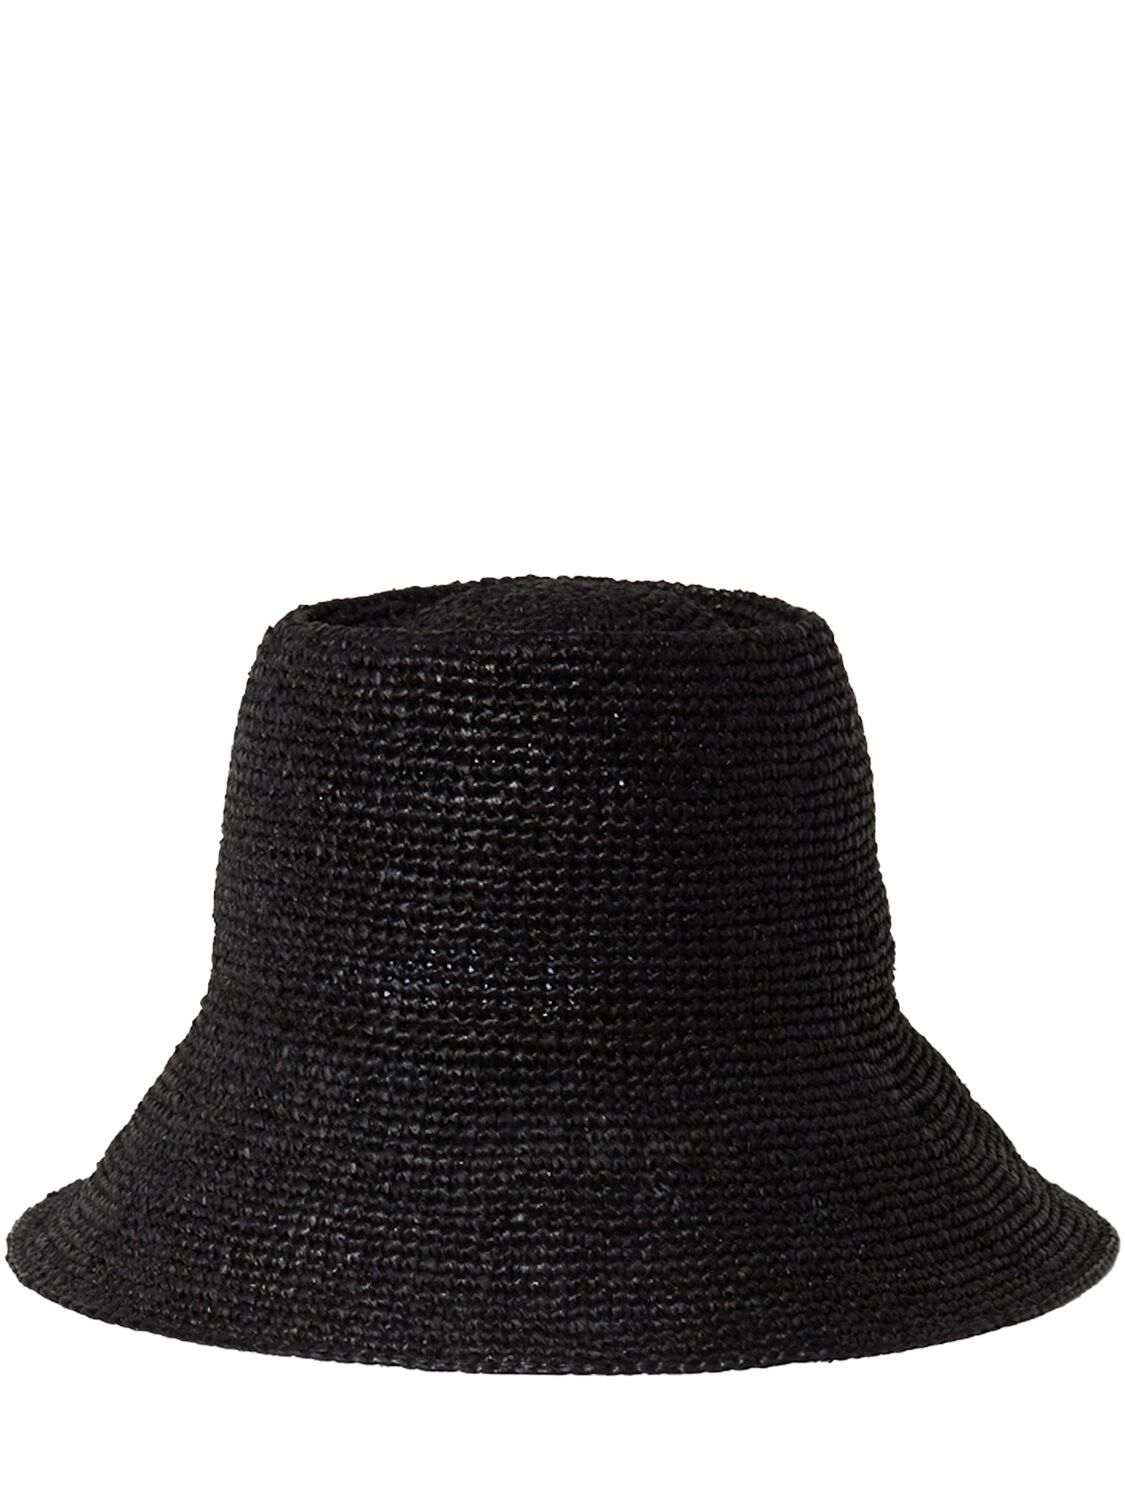 Janessa Leone Felix Straw Bucket Hat In Black